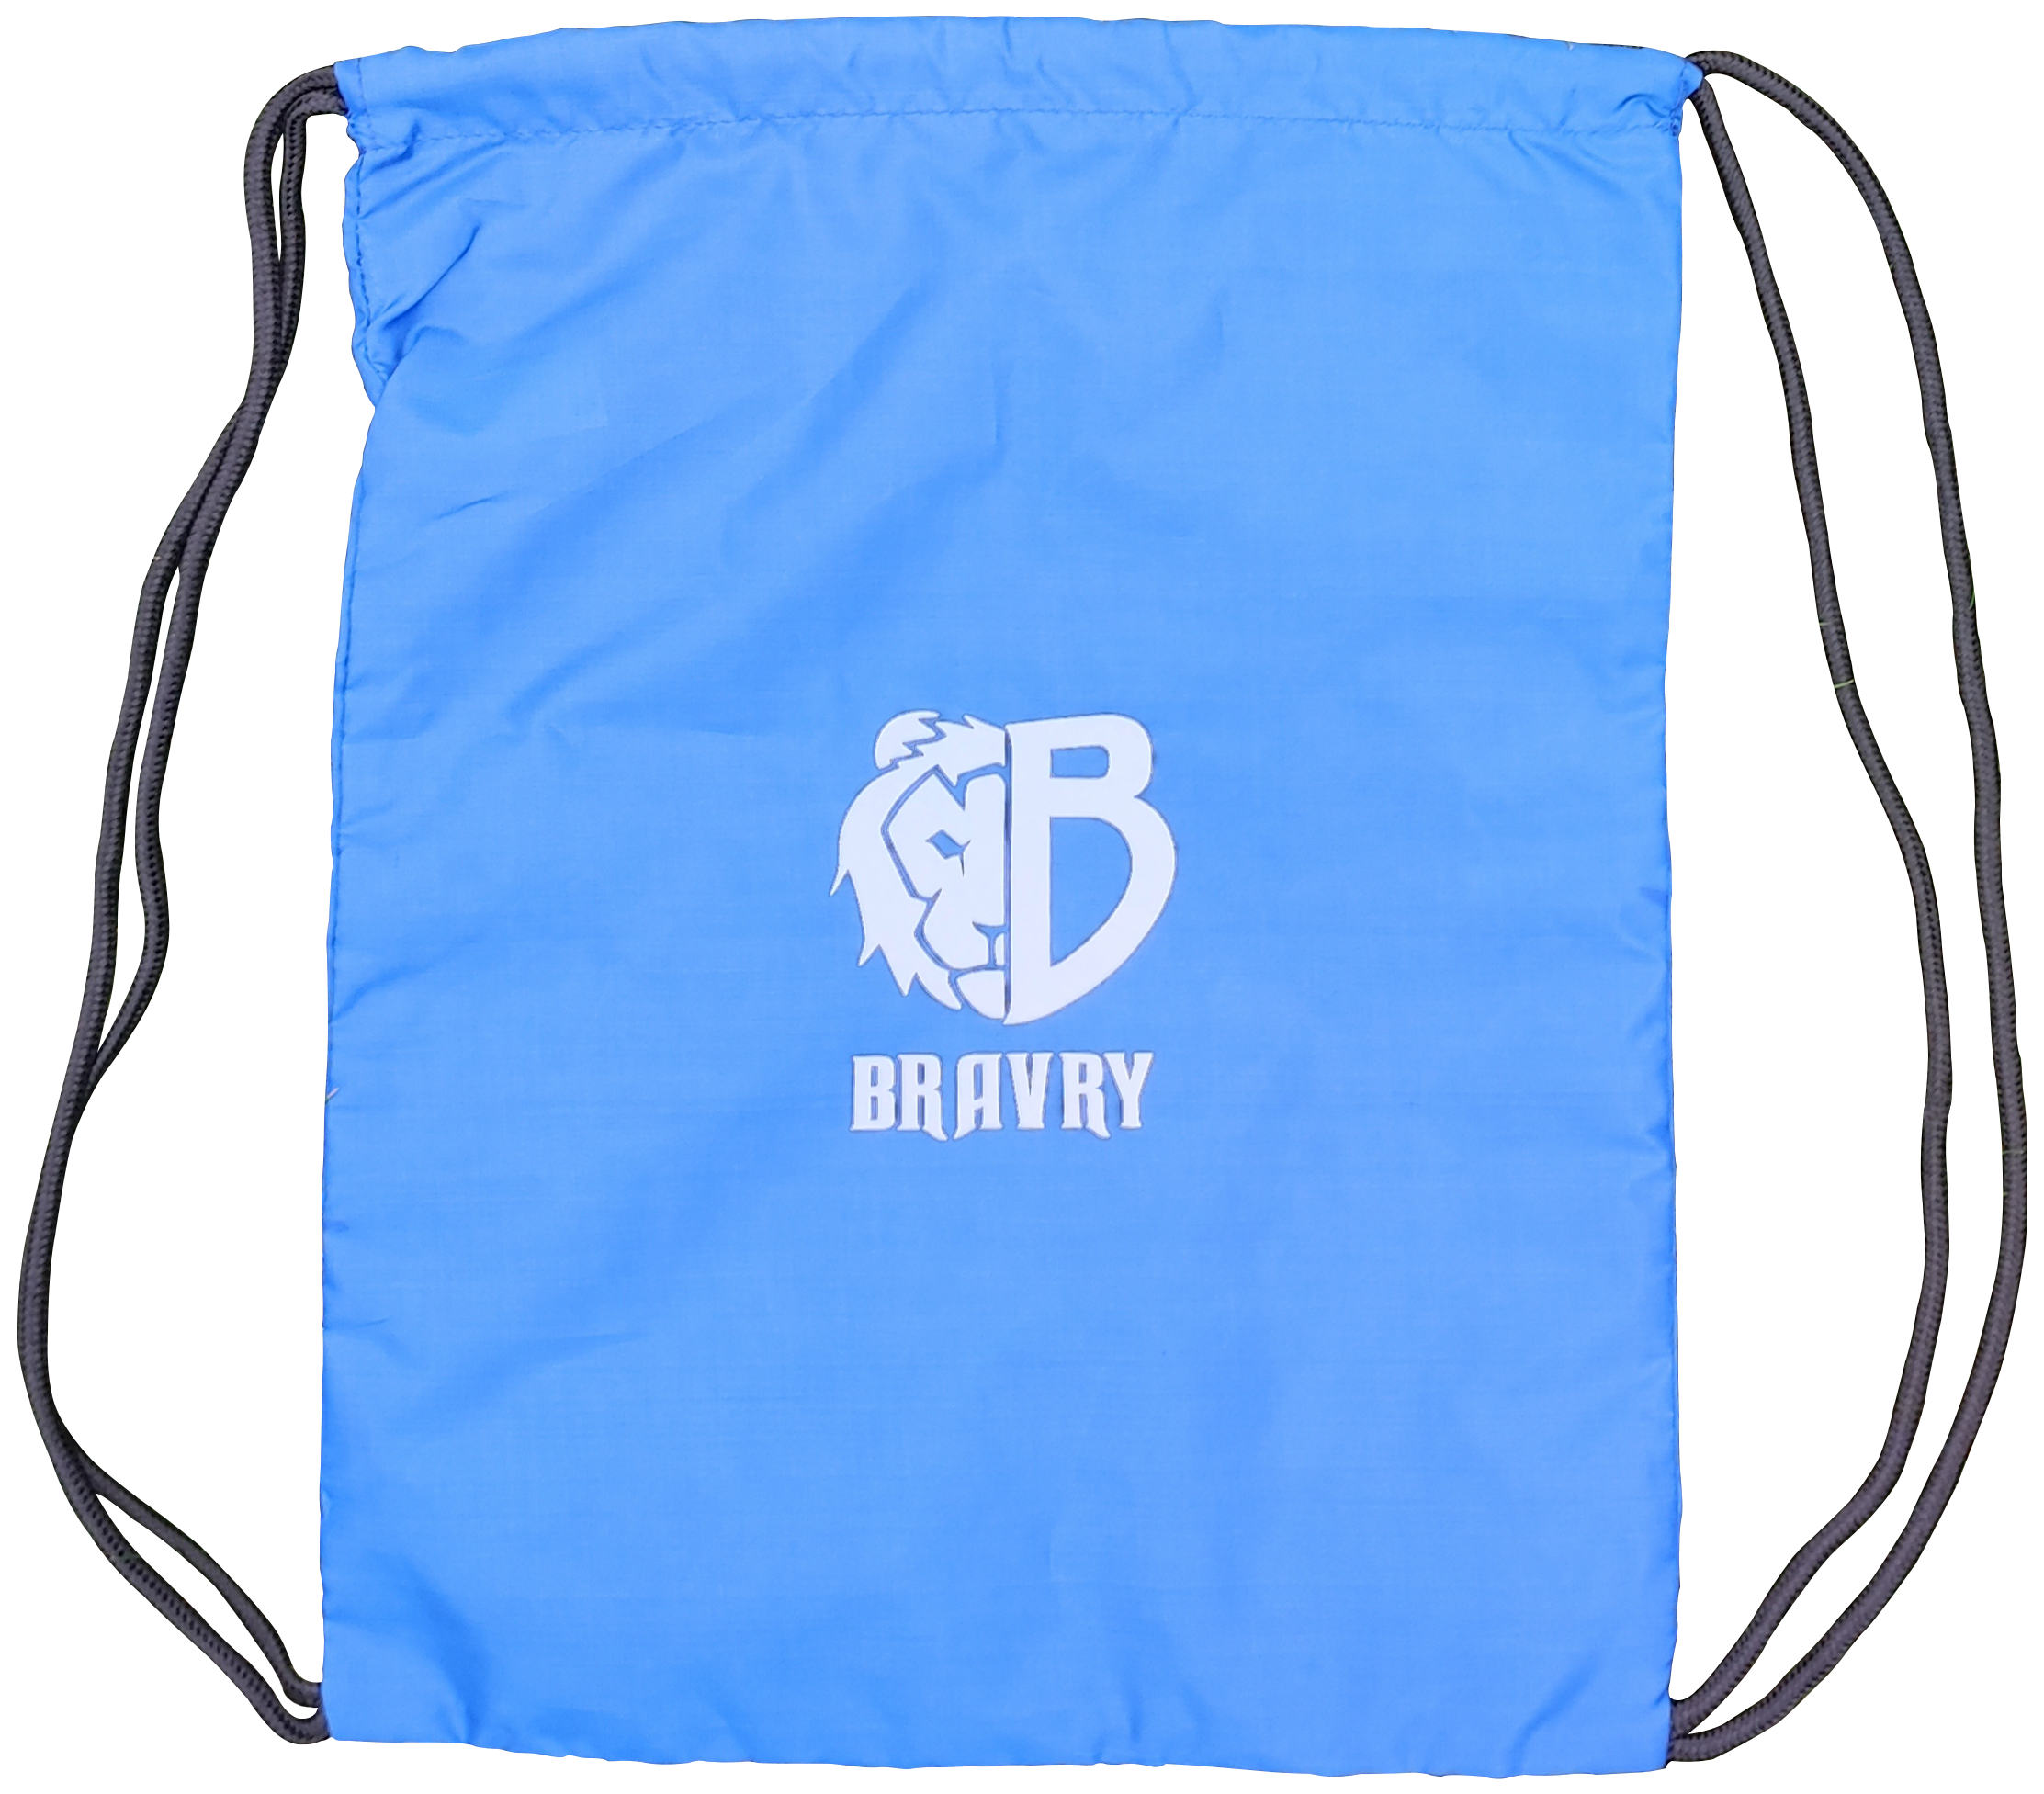 Рюкзак на затяжках BRAVRY Compact синий